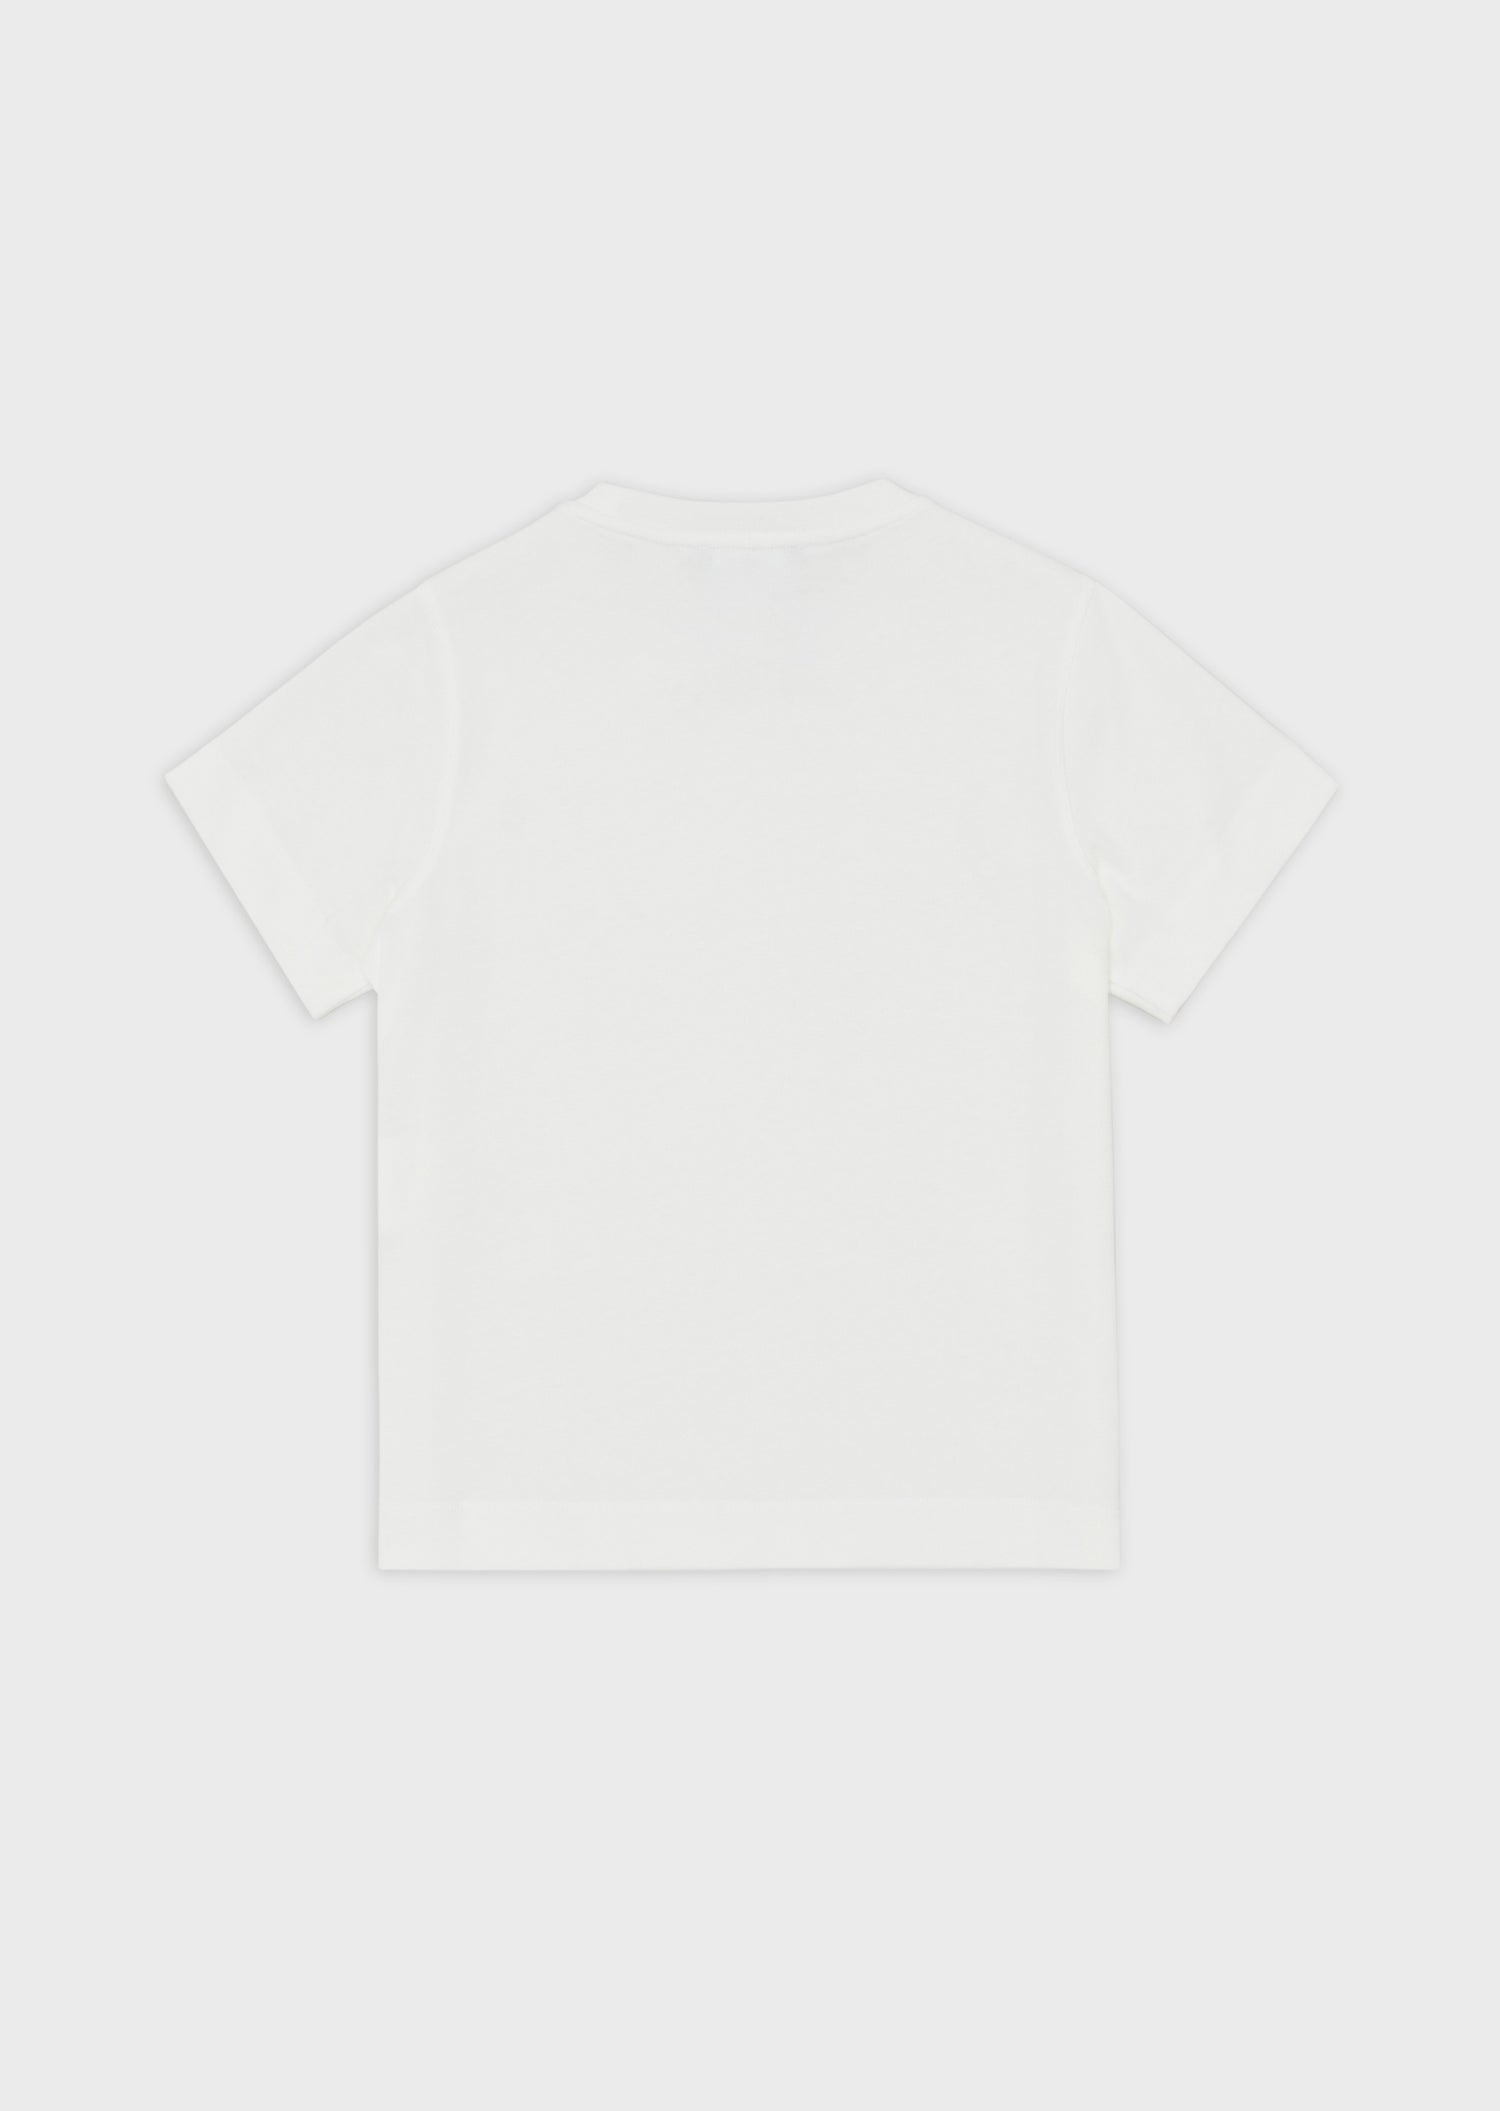 Emporio Armani T-Shirt Style:3R4Tjm